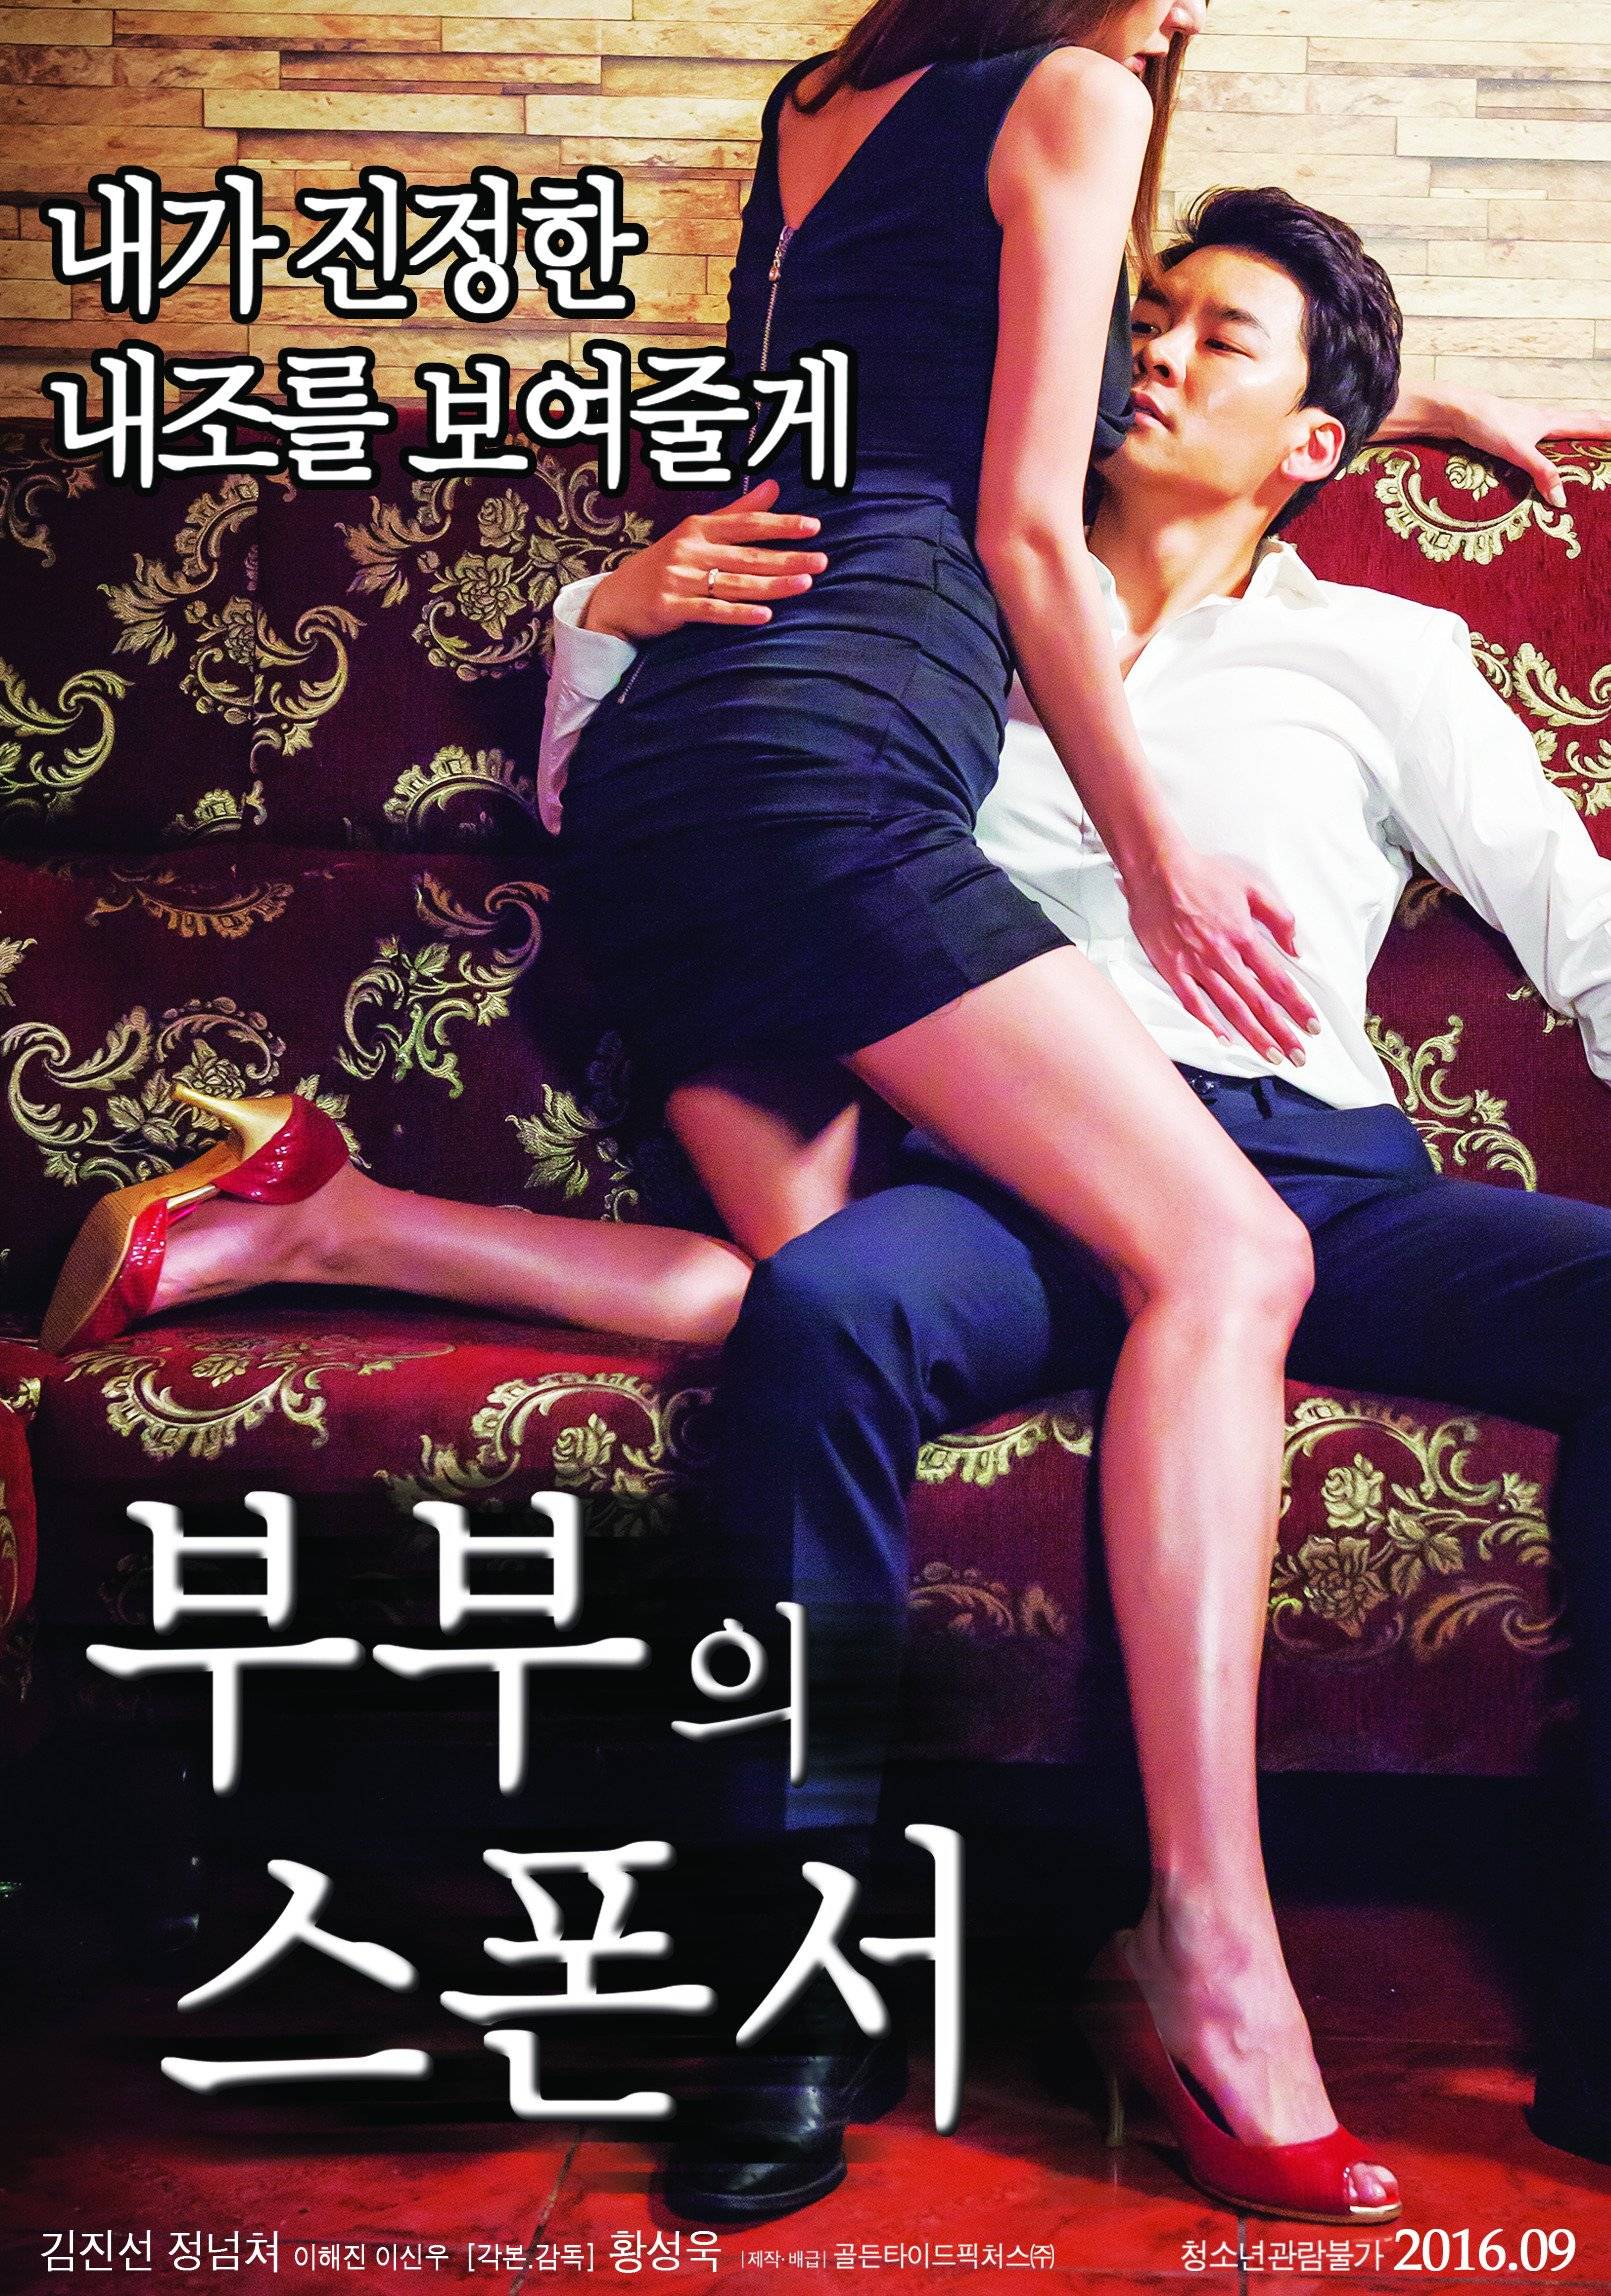 Couples Sponsor Korean Movie - Video] Adult rated trailer released for the Korean movie 'The Couple's  Sponsor' @ HanCinema